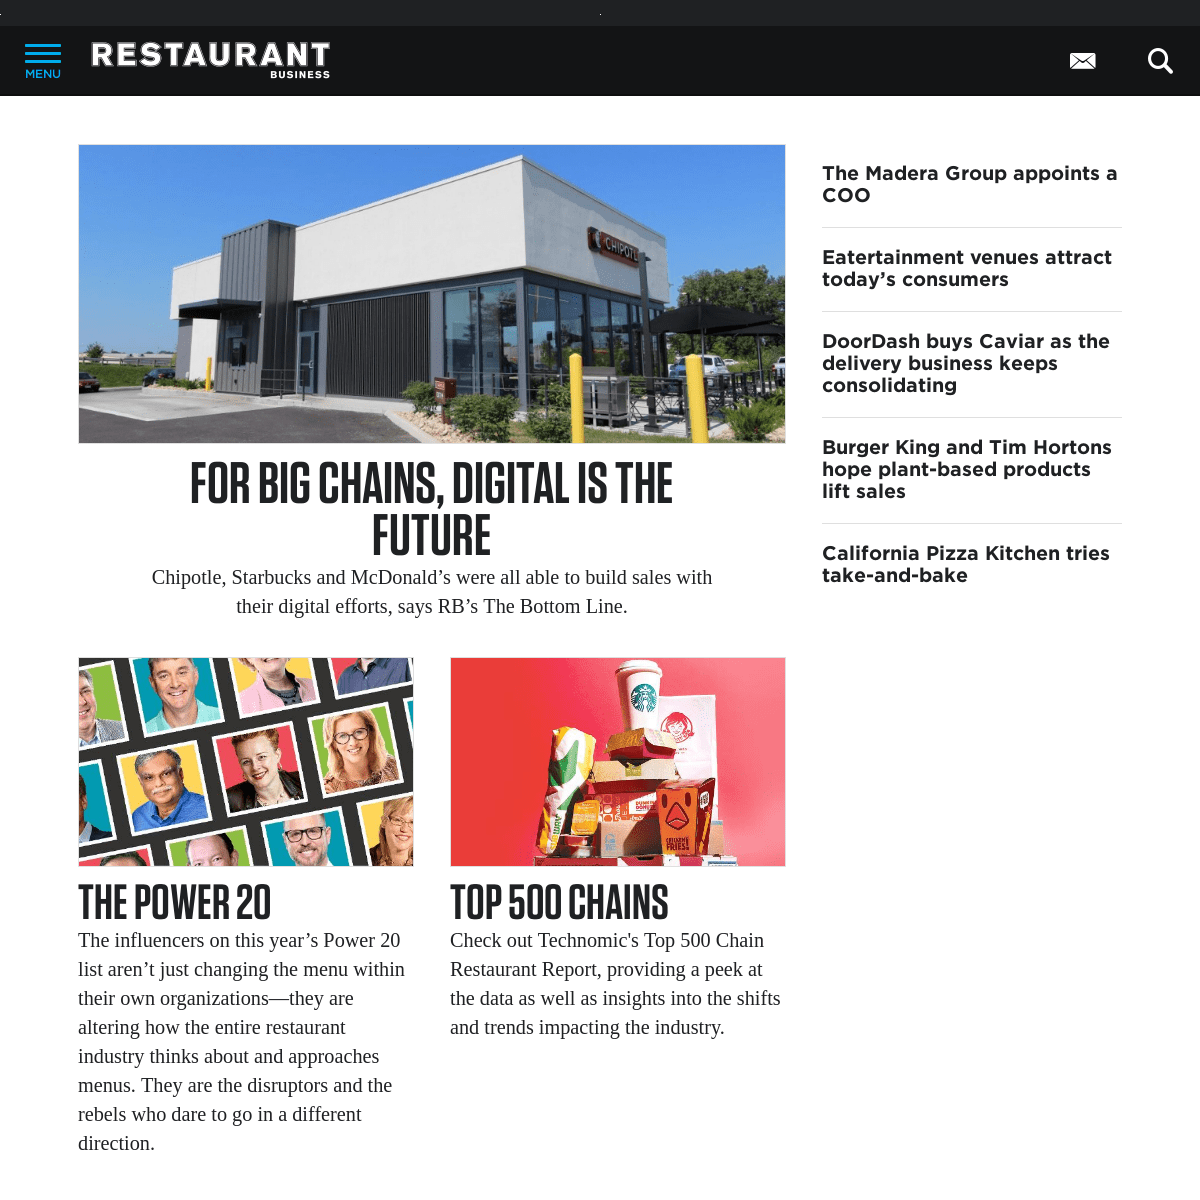 Restaurant Business Magazine - Trends, Ideas and News